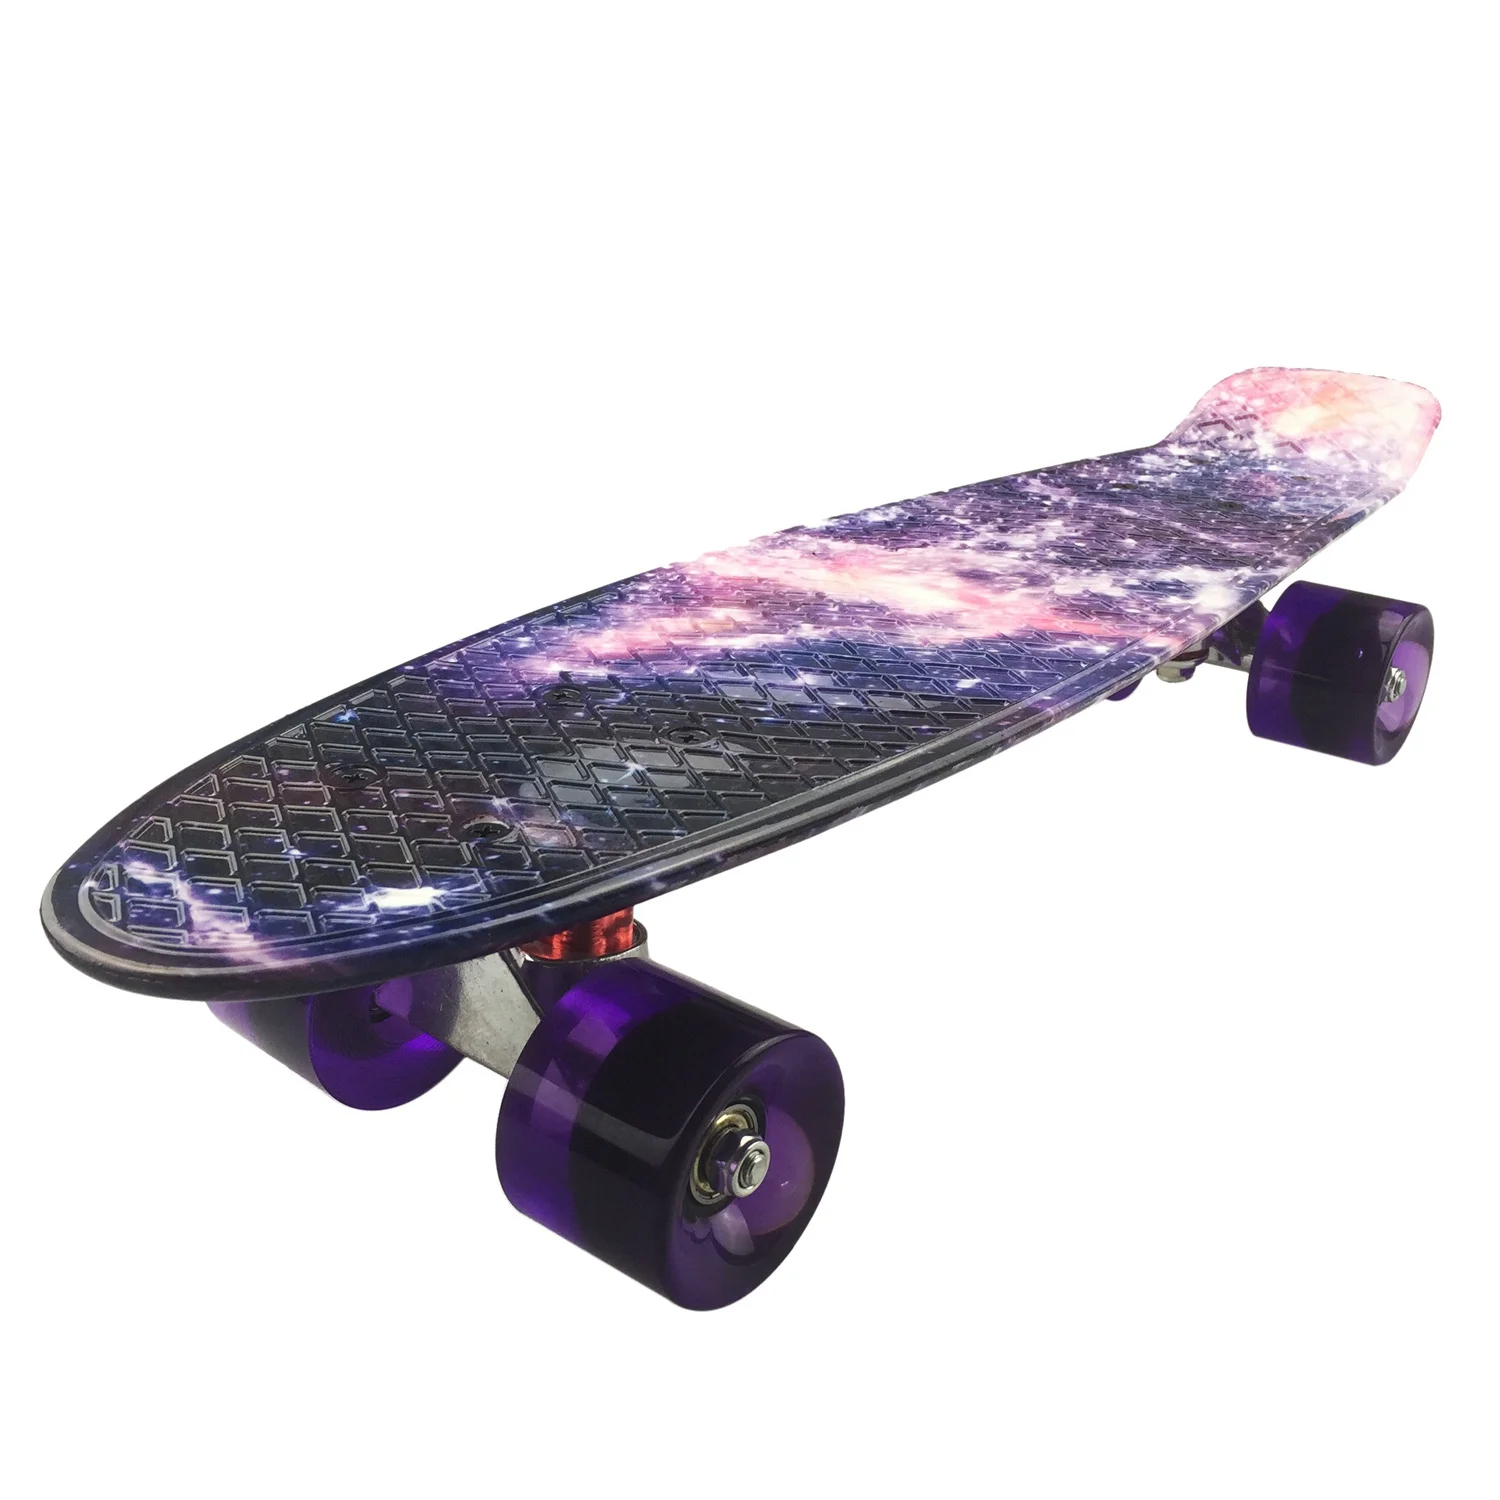 

Skateboard Mini Cruiser Board 22 inch X 6 inch Retro Longboard Skate Long Board Graphic Galaxy Purple